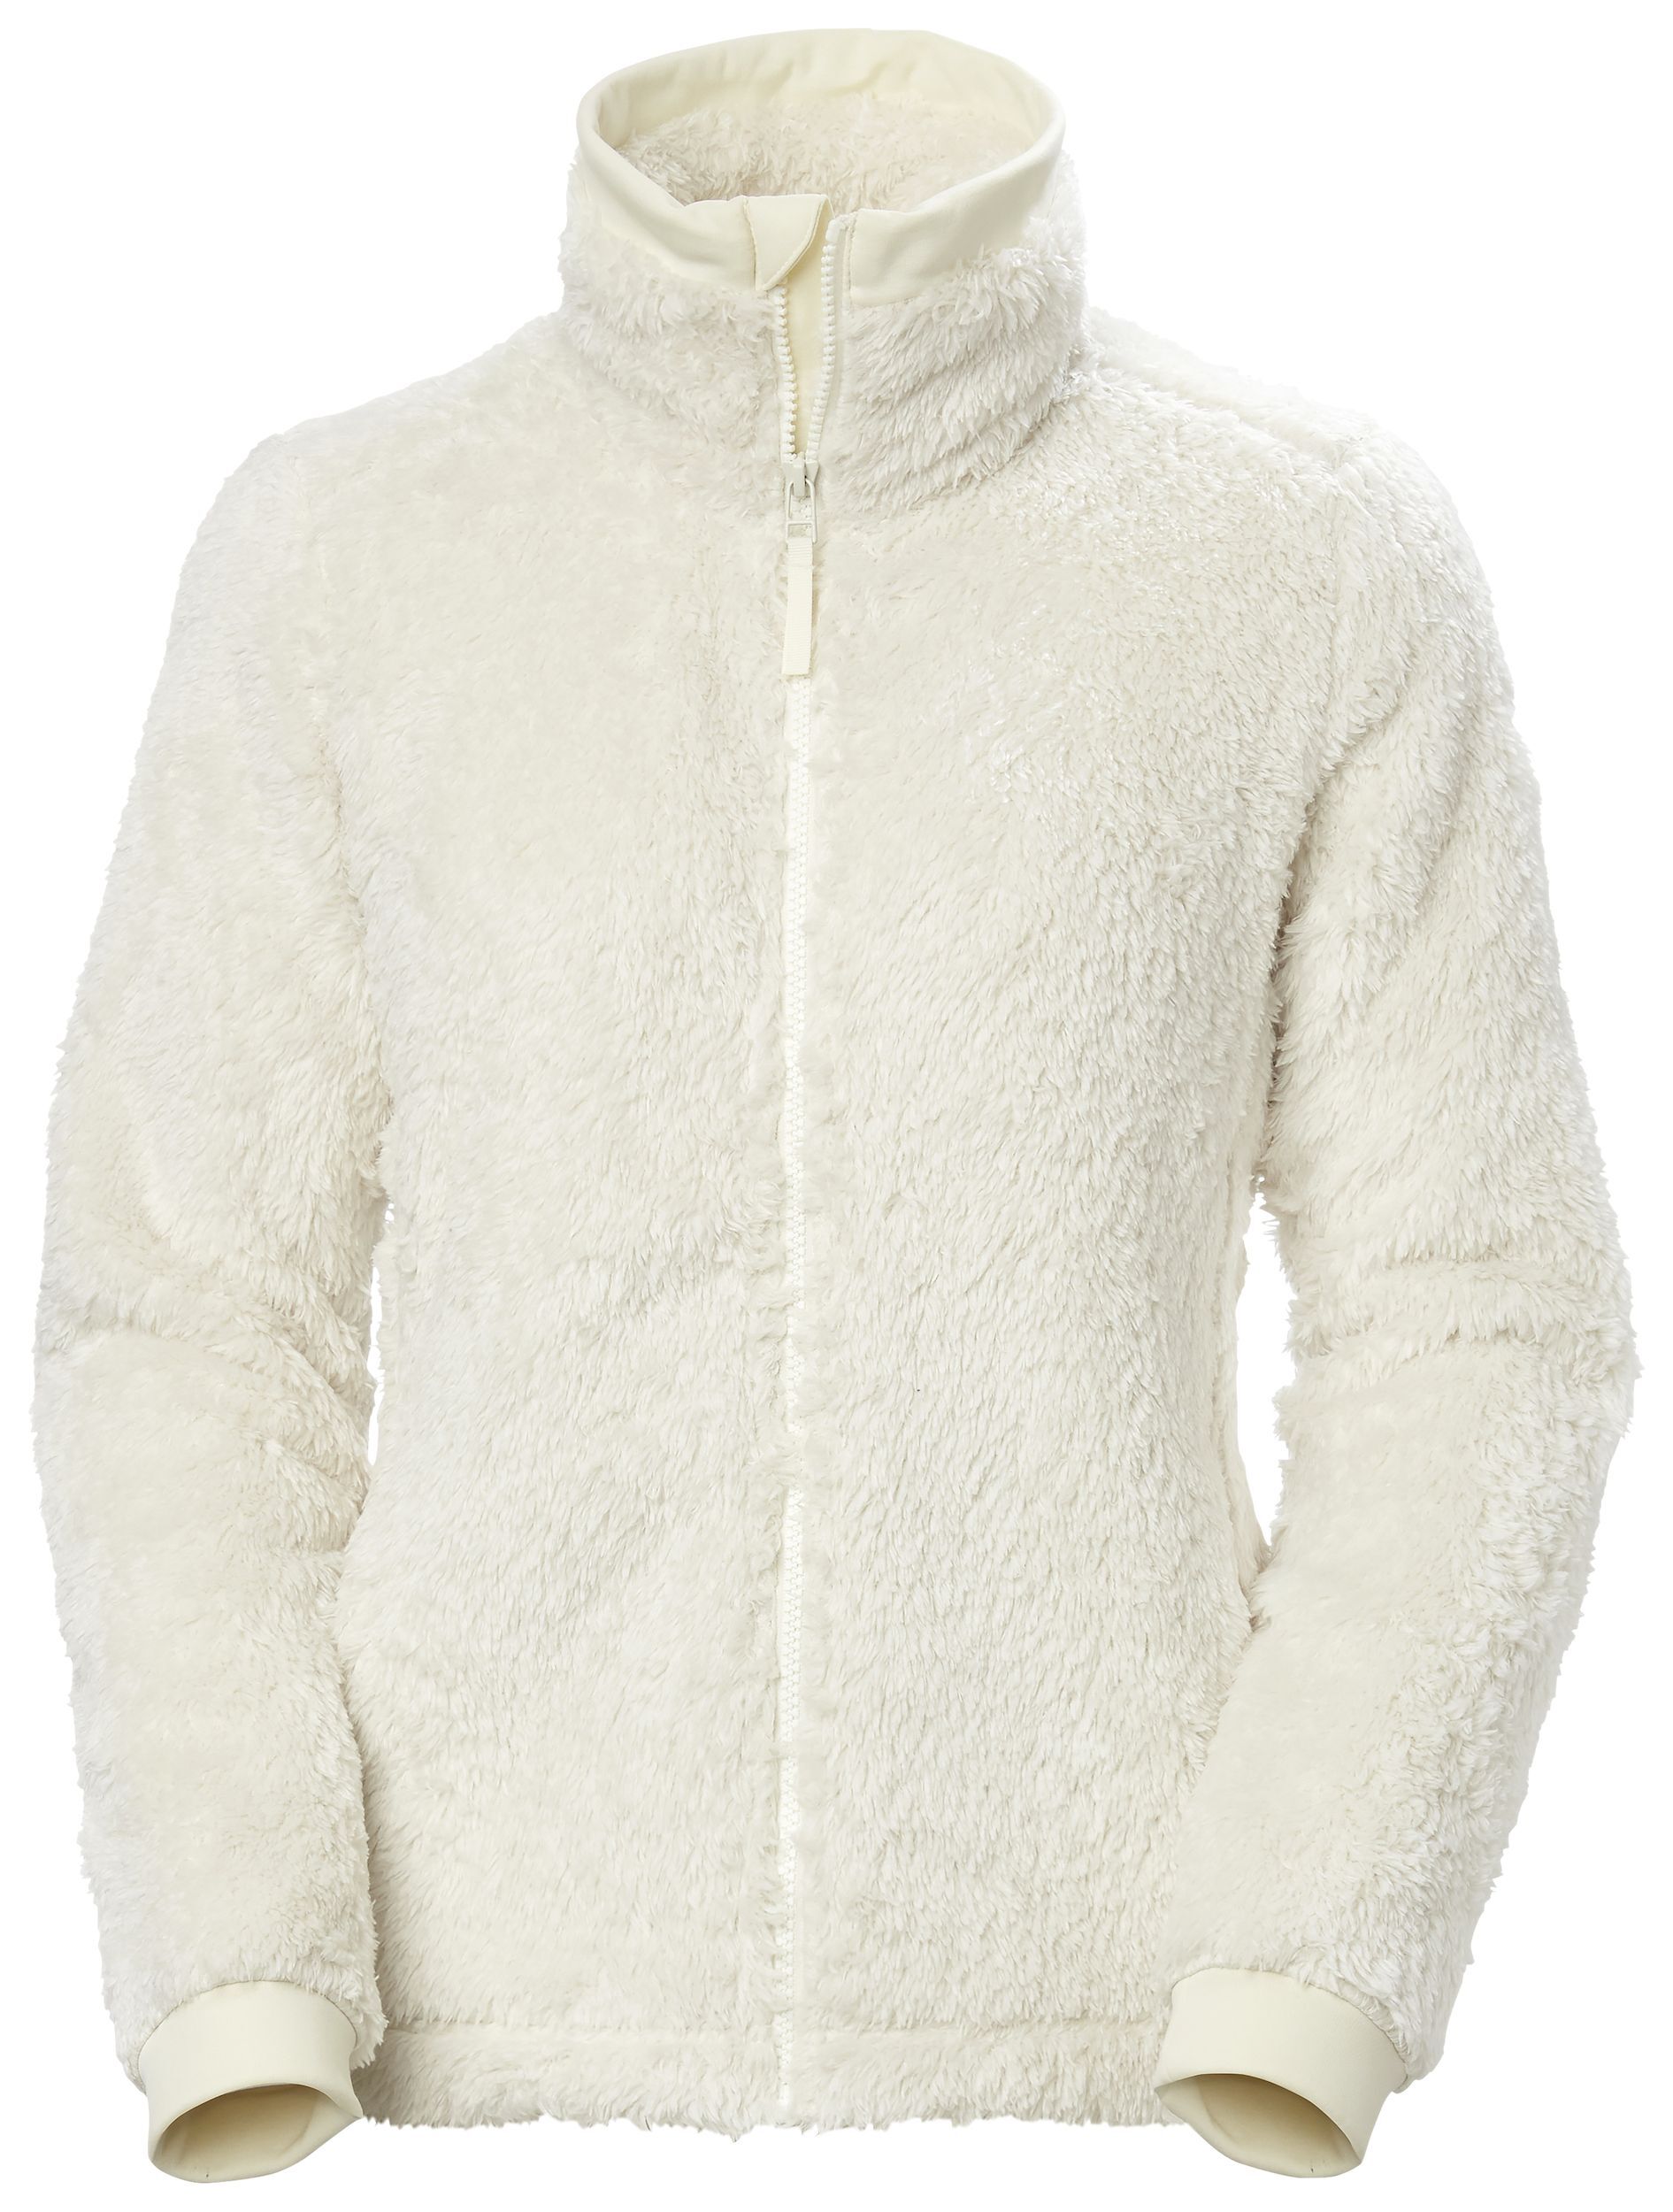 Helly Hansen Precious Fleece Jacket 2.0 - Fleece jacket - Women's